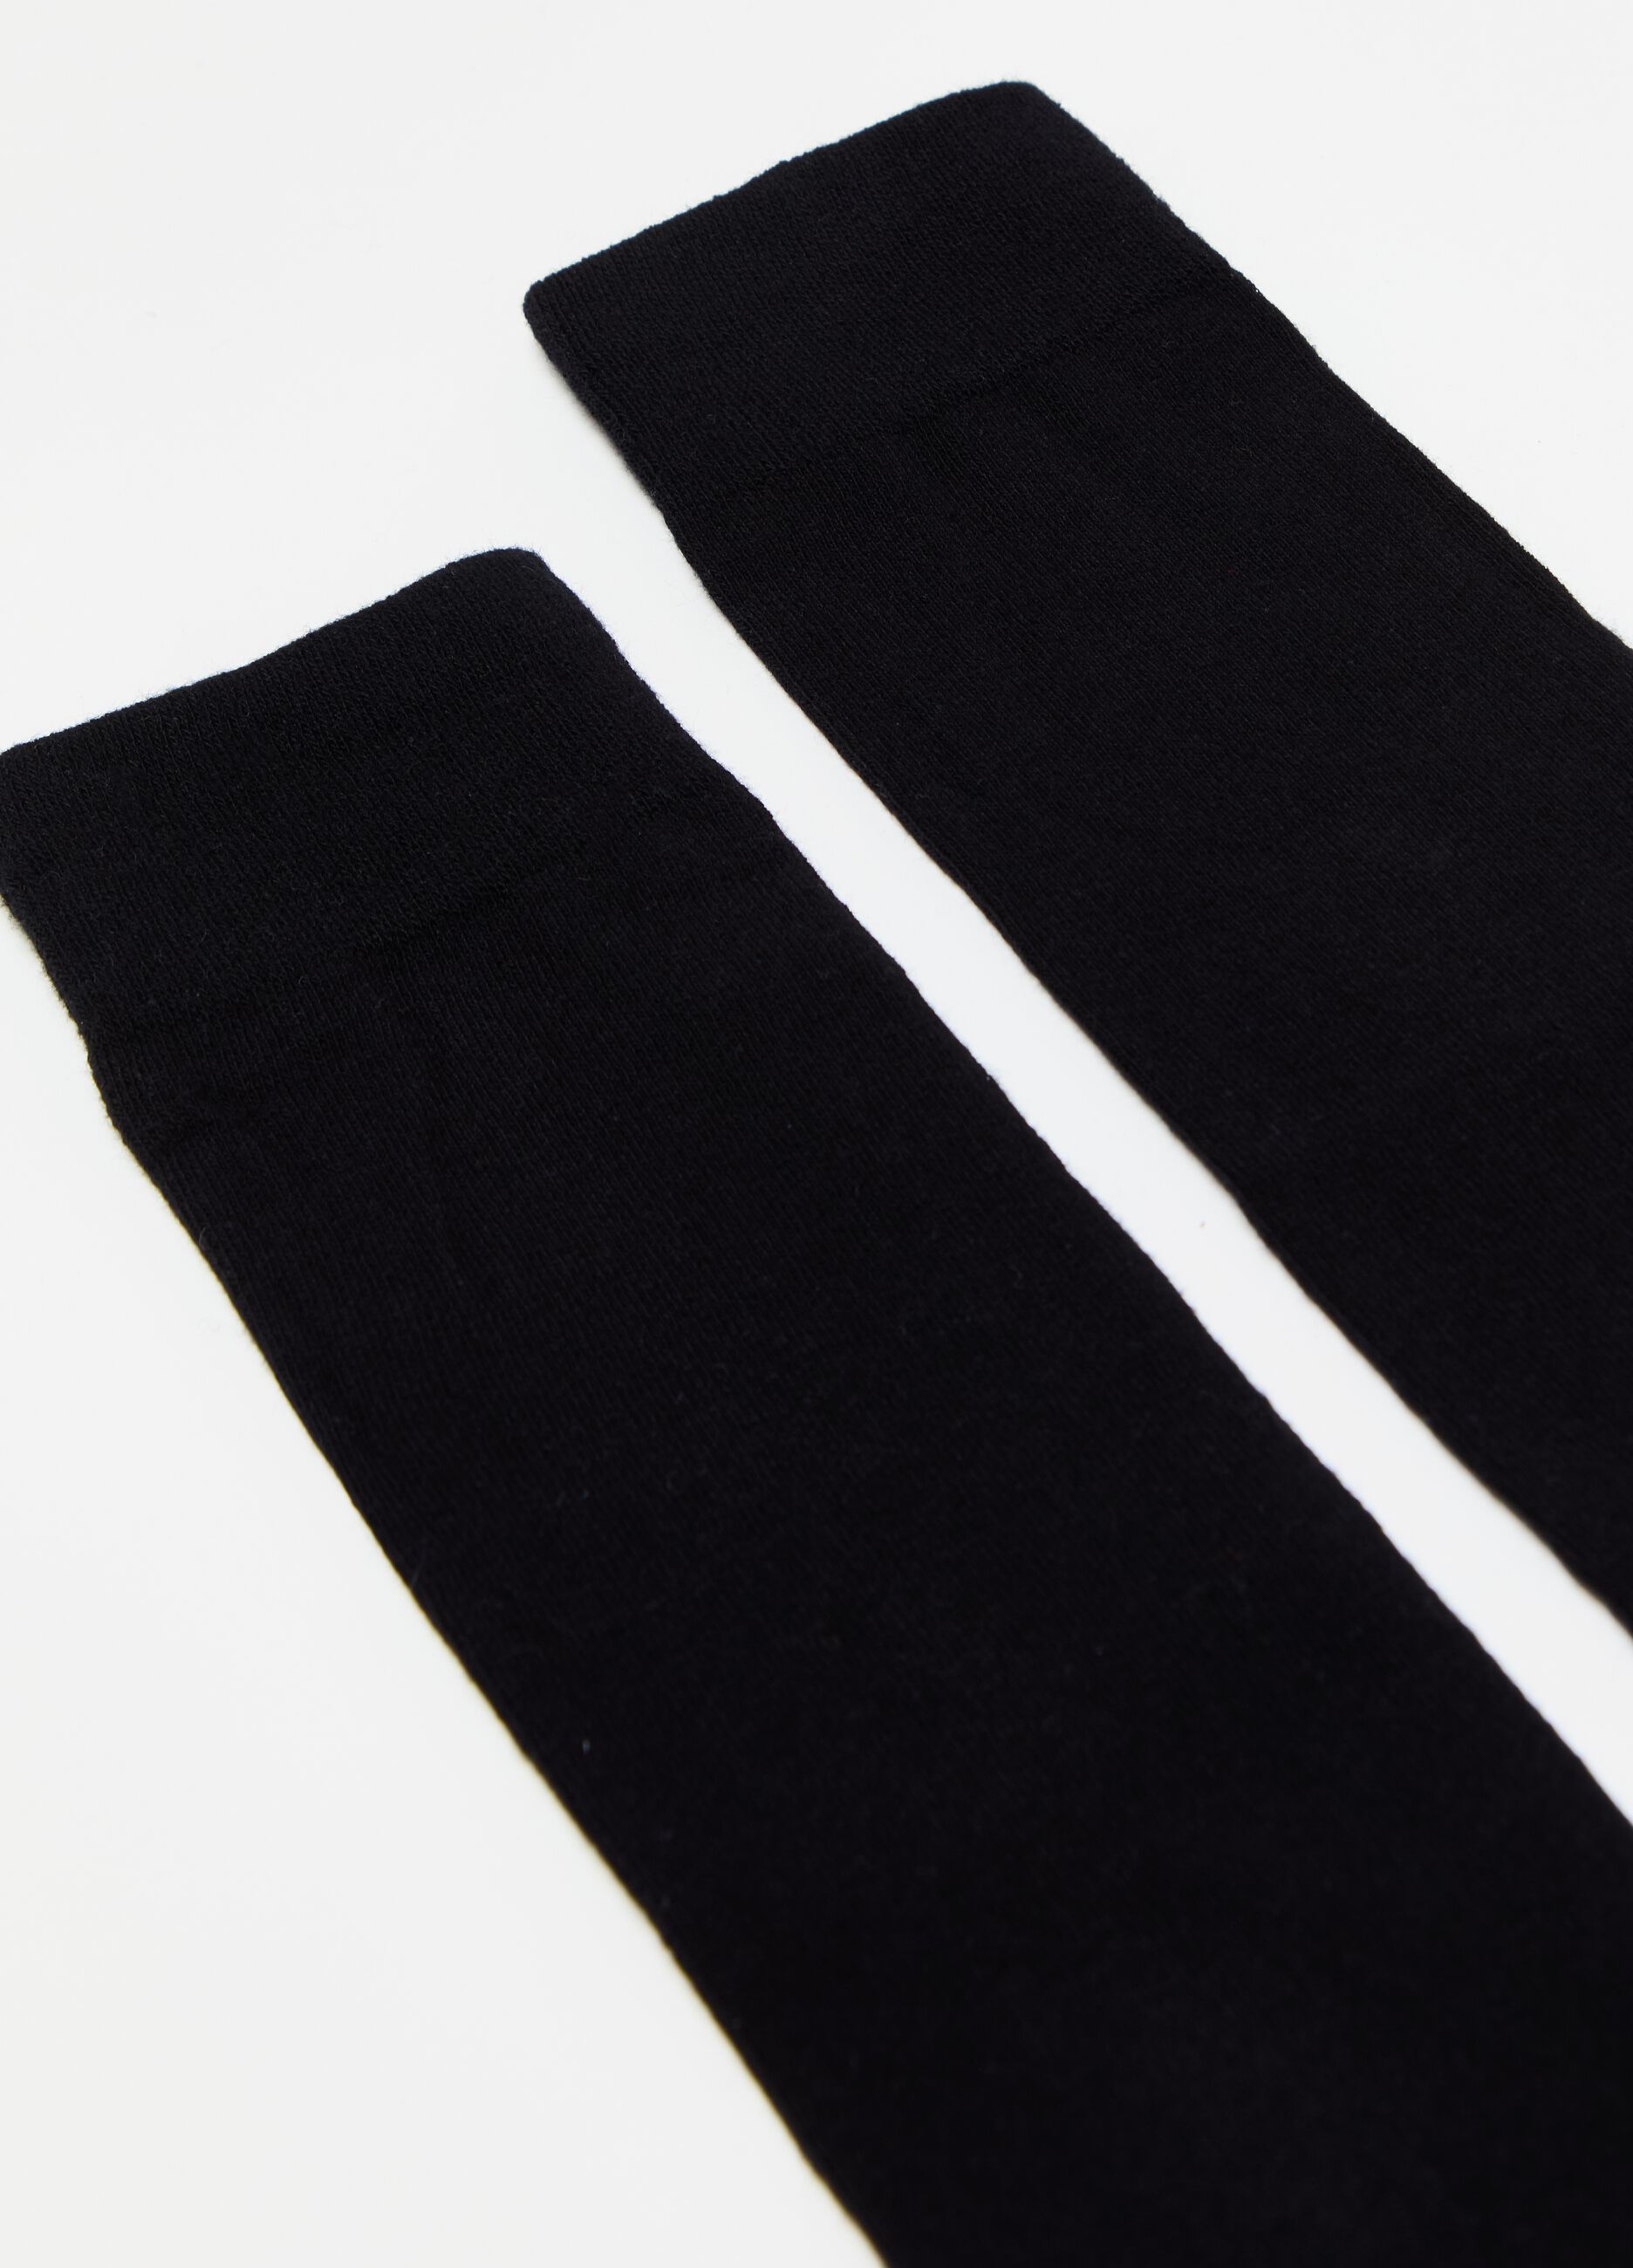 Five-pack stretch long socks